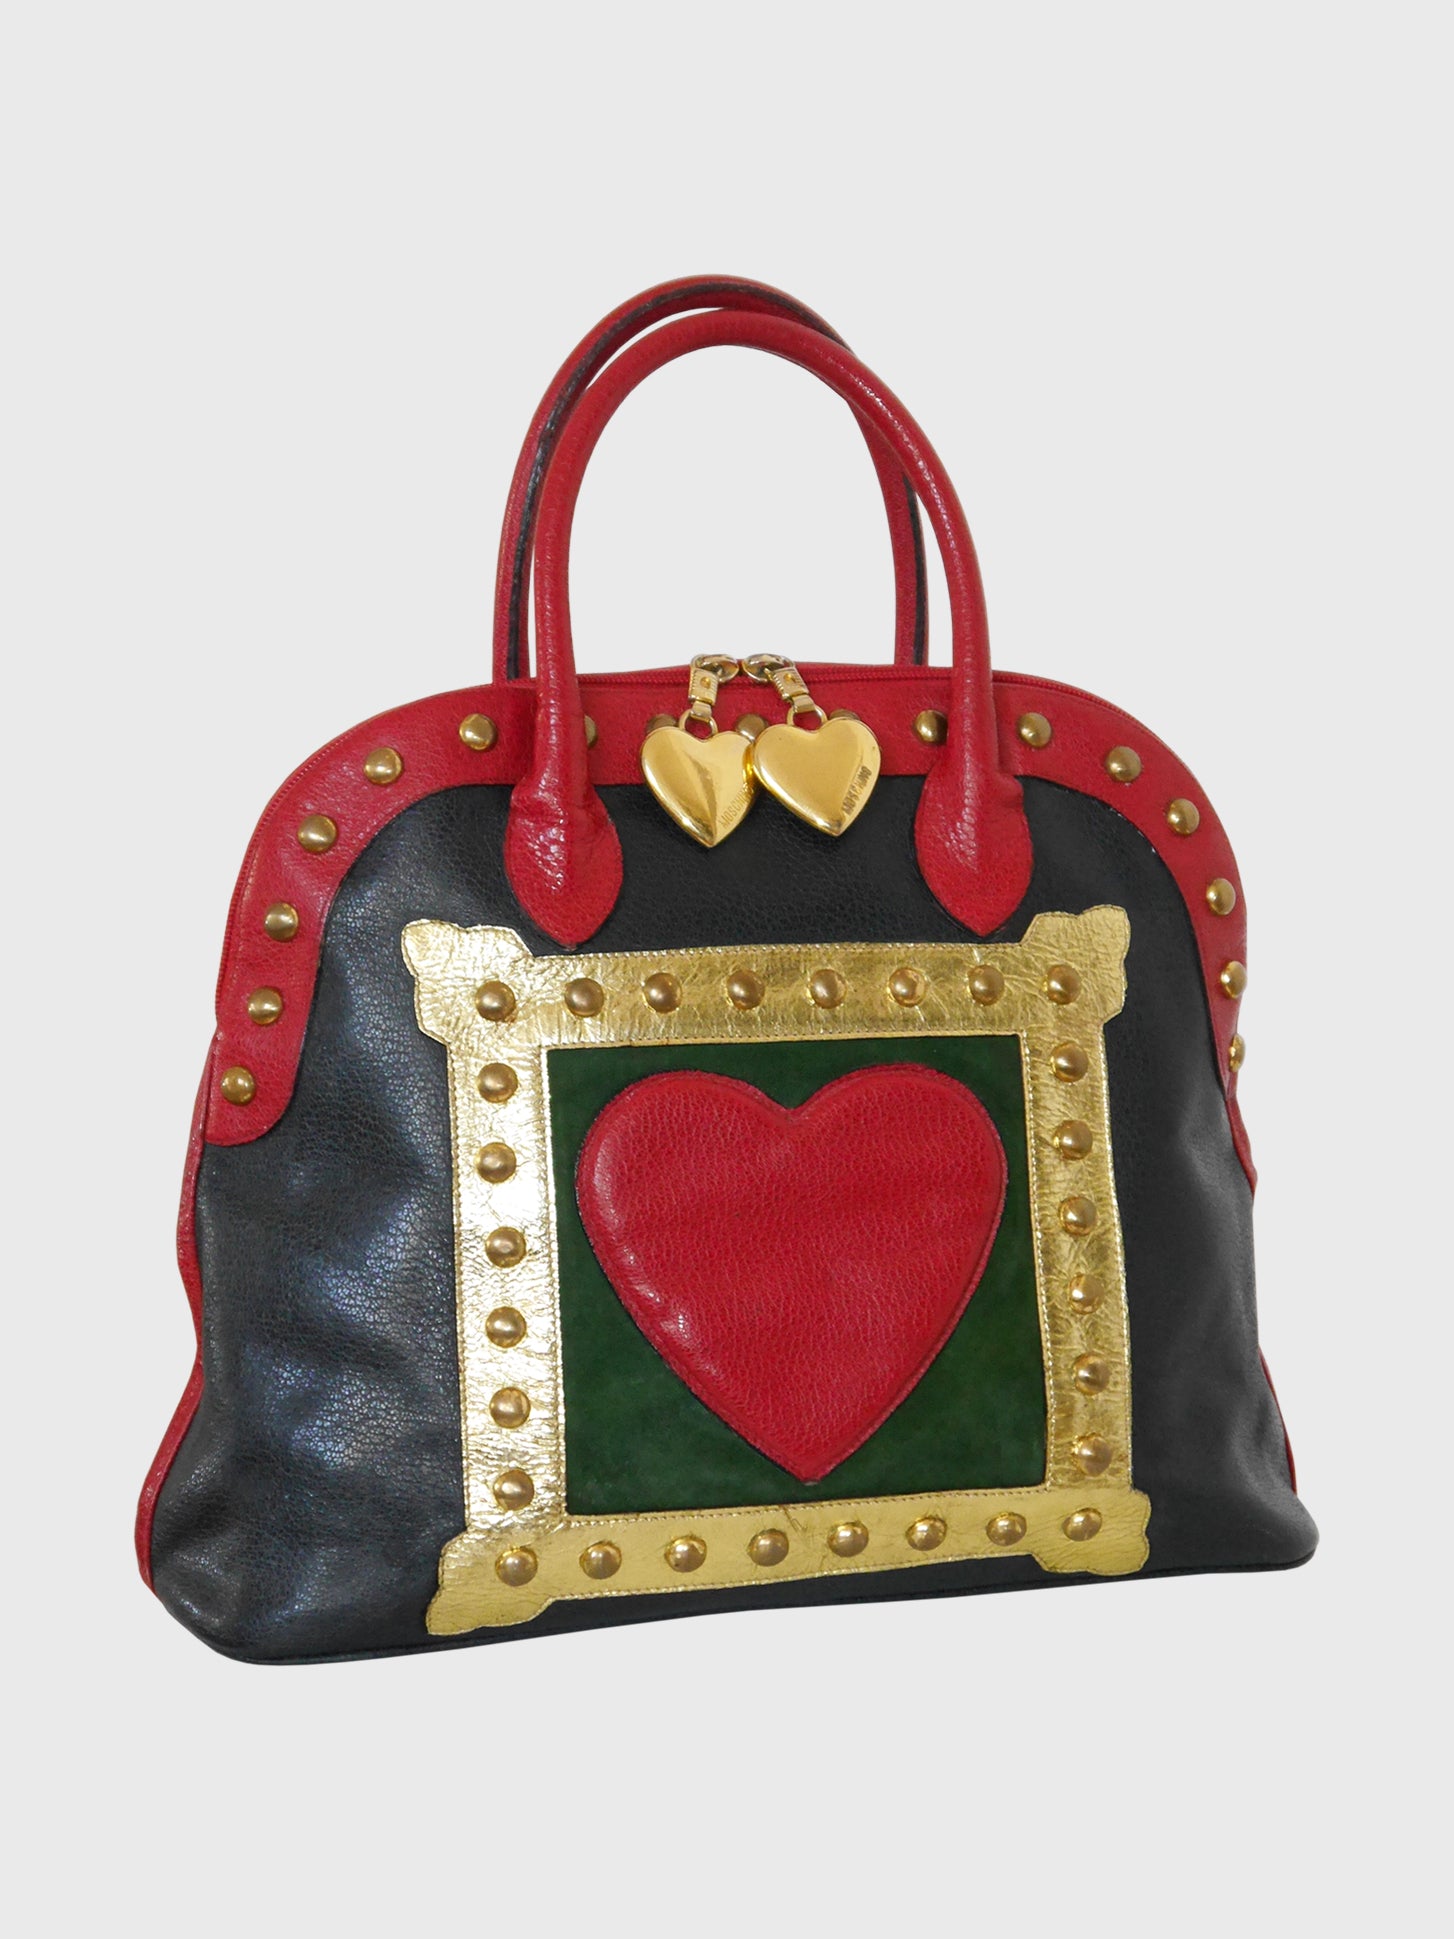 MOSCHINO by Redwall c. 1990 "ART IS LOVE" Vintage Handbag